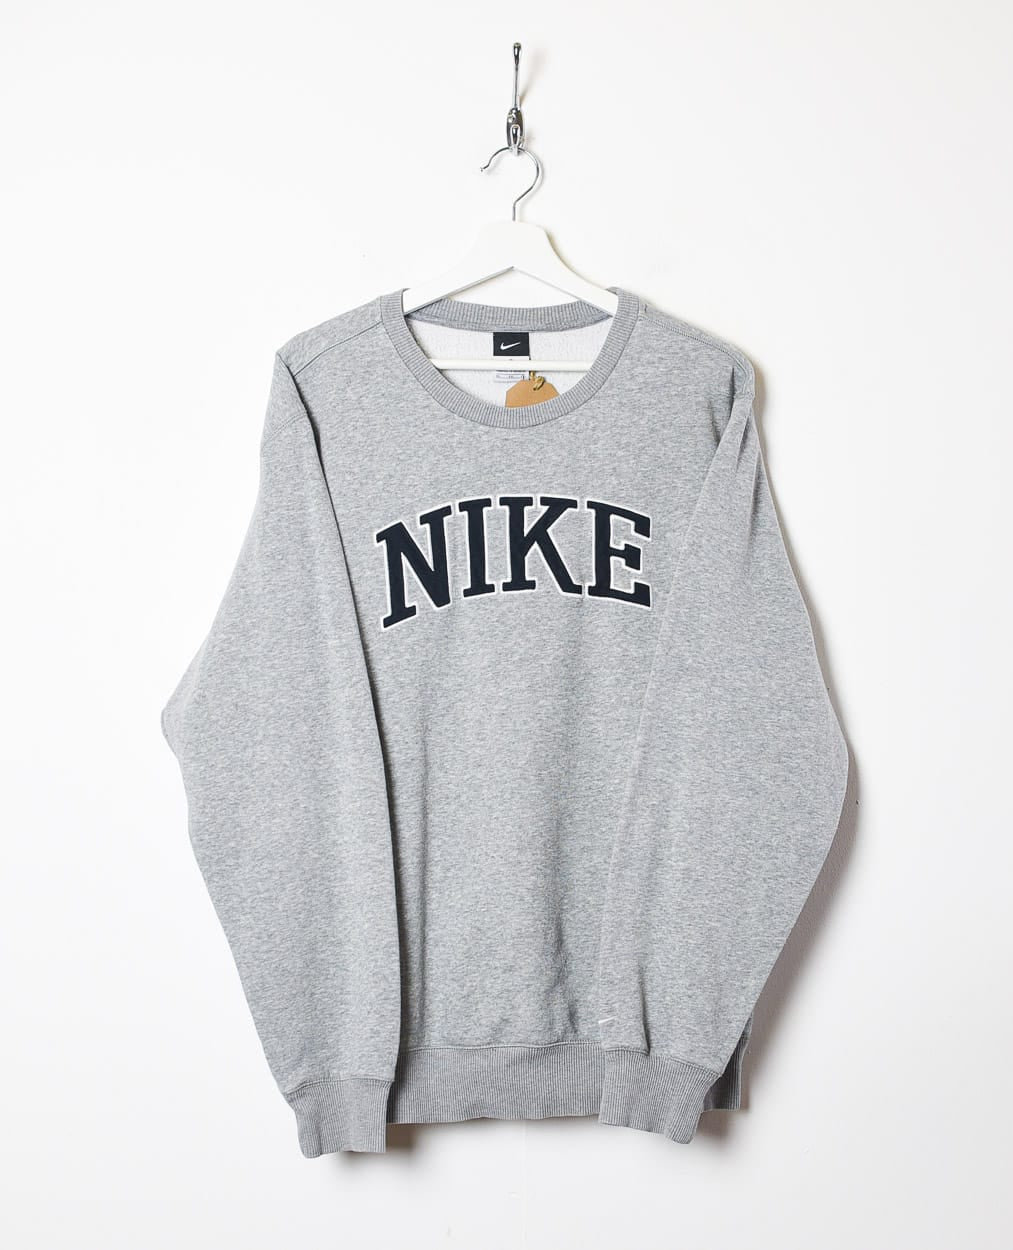 Shop Nike Sweatshirts (FQ8011-110) by soooocute!